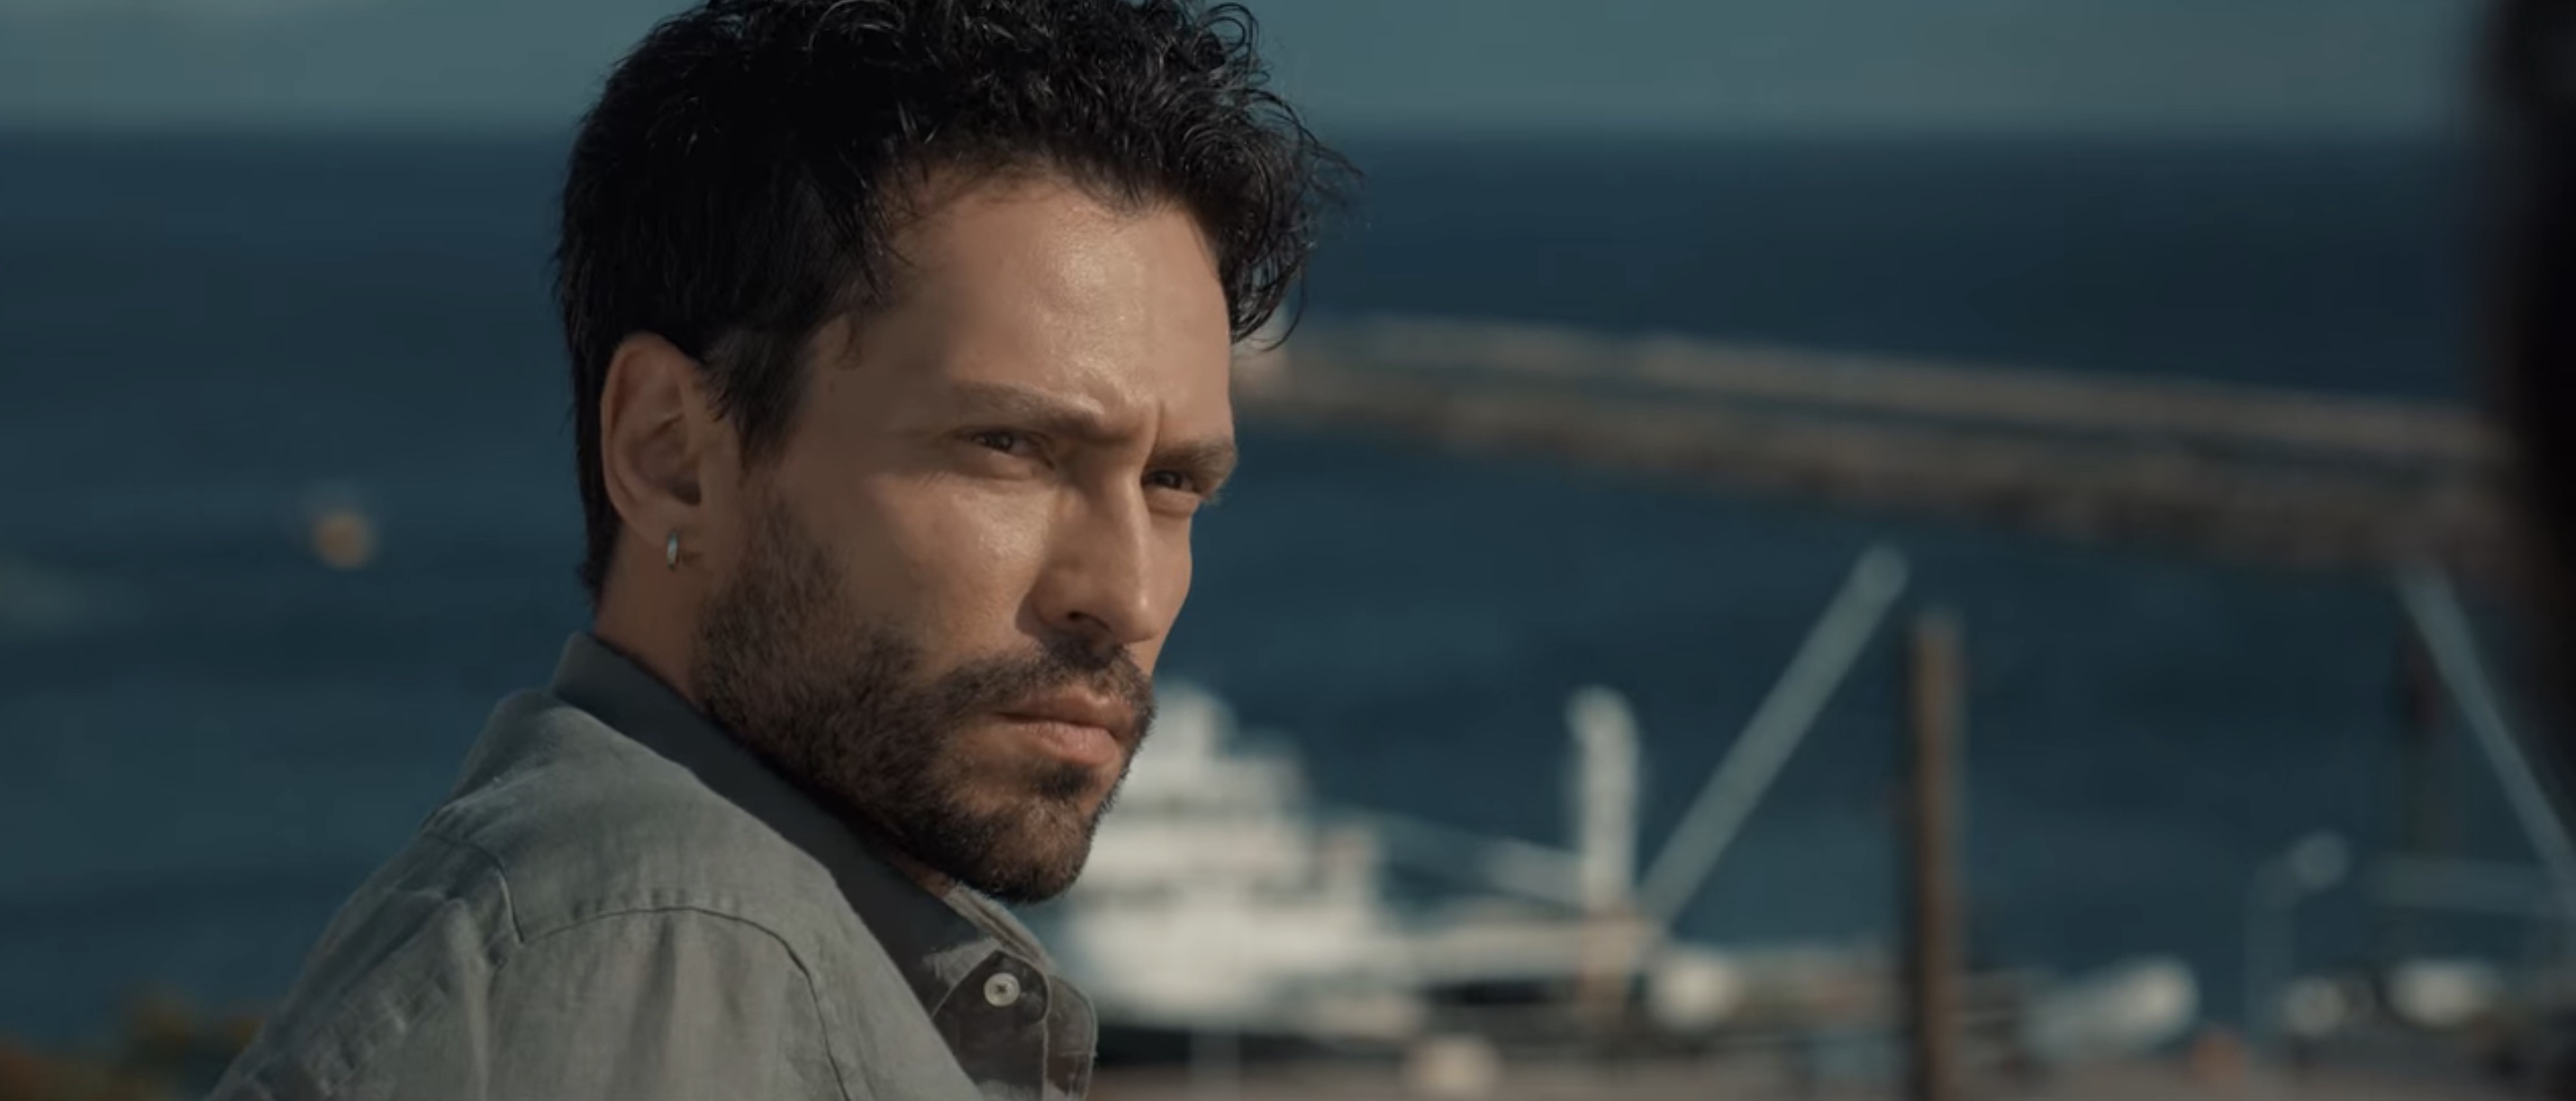 Make Me Believe Cast on Netflix - Ekin Koç as Deniz